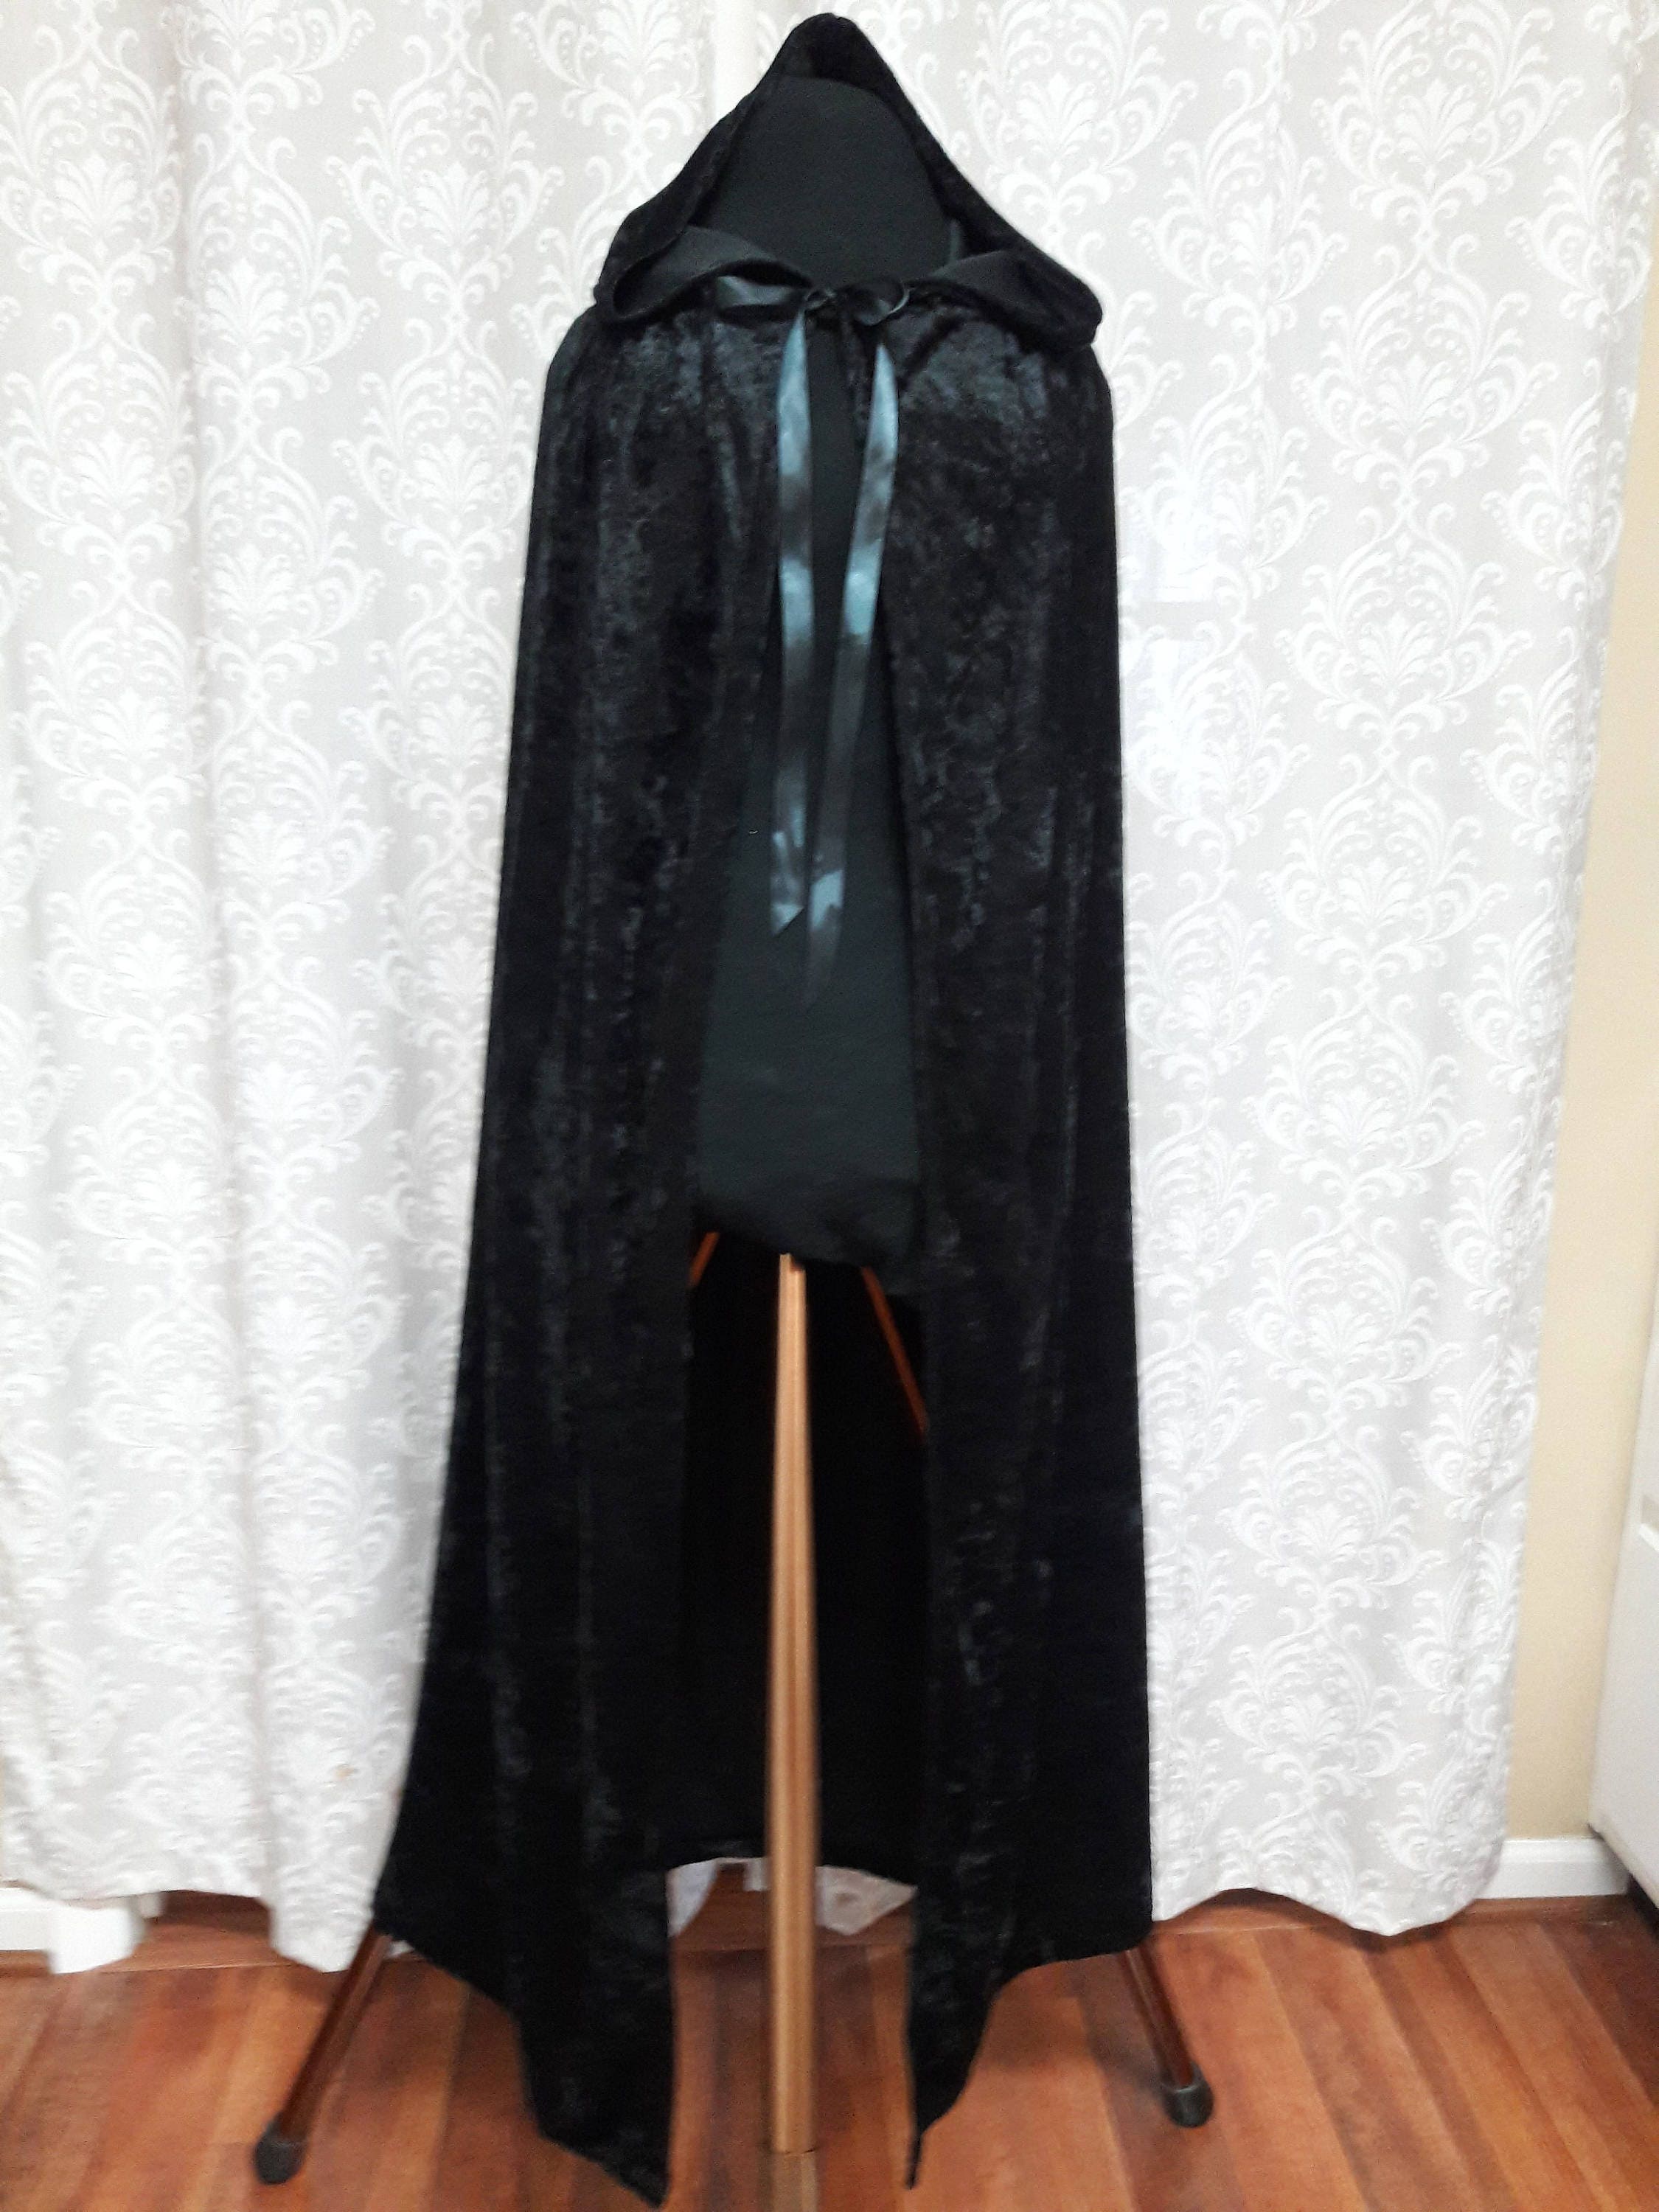 Black Hooded Cloak Black Cape hooded Cosplay Cape LARP | Etsy